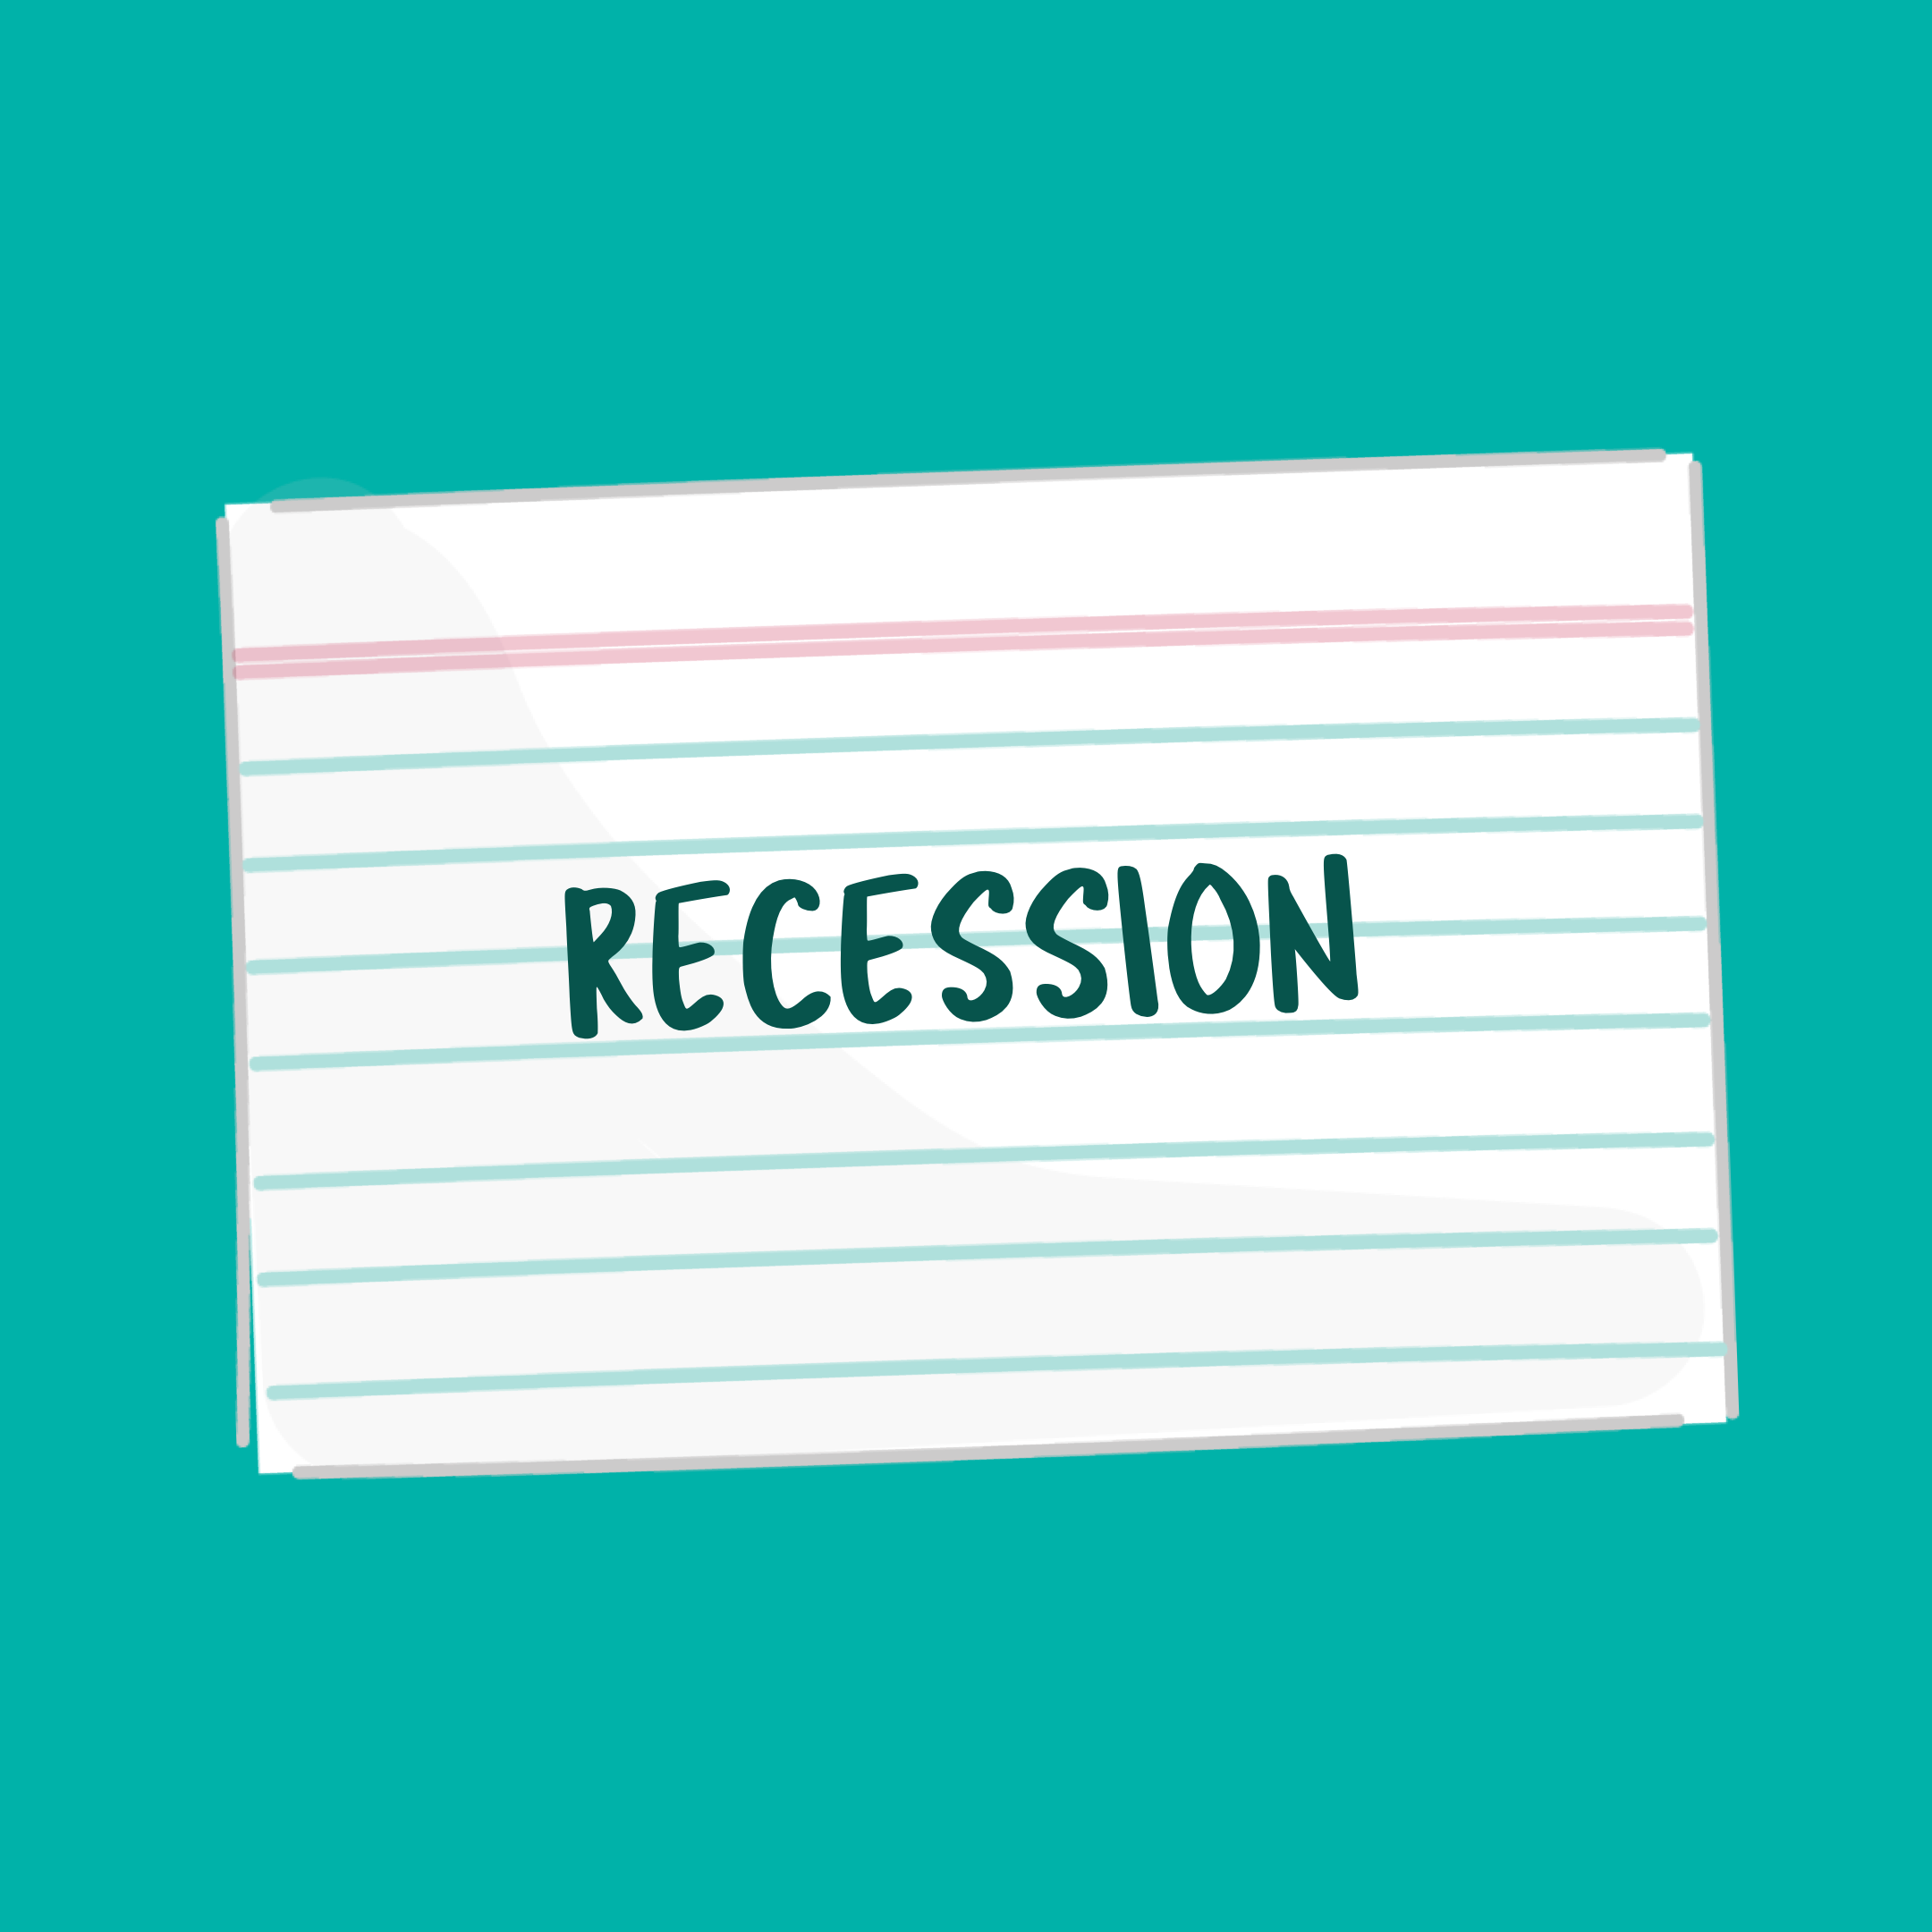 Recession card